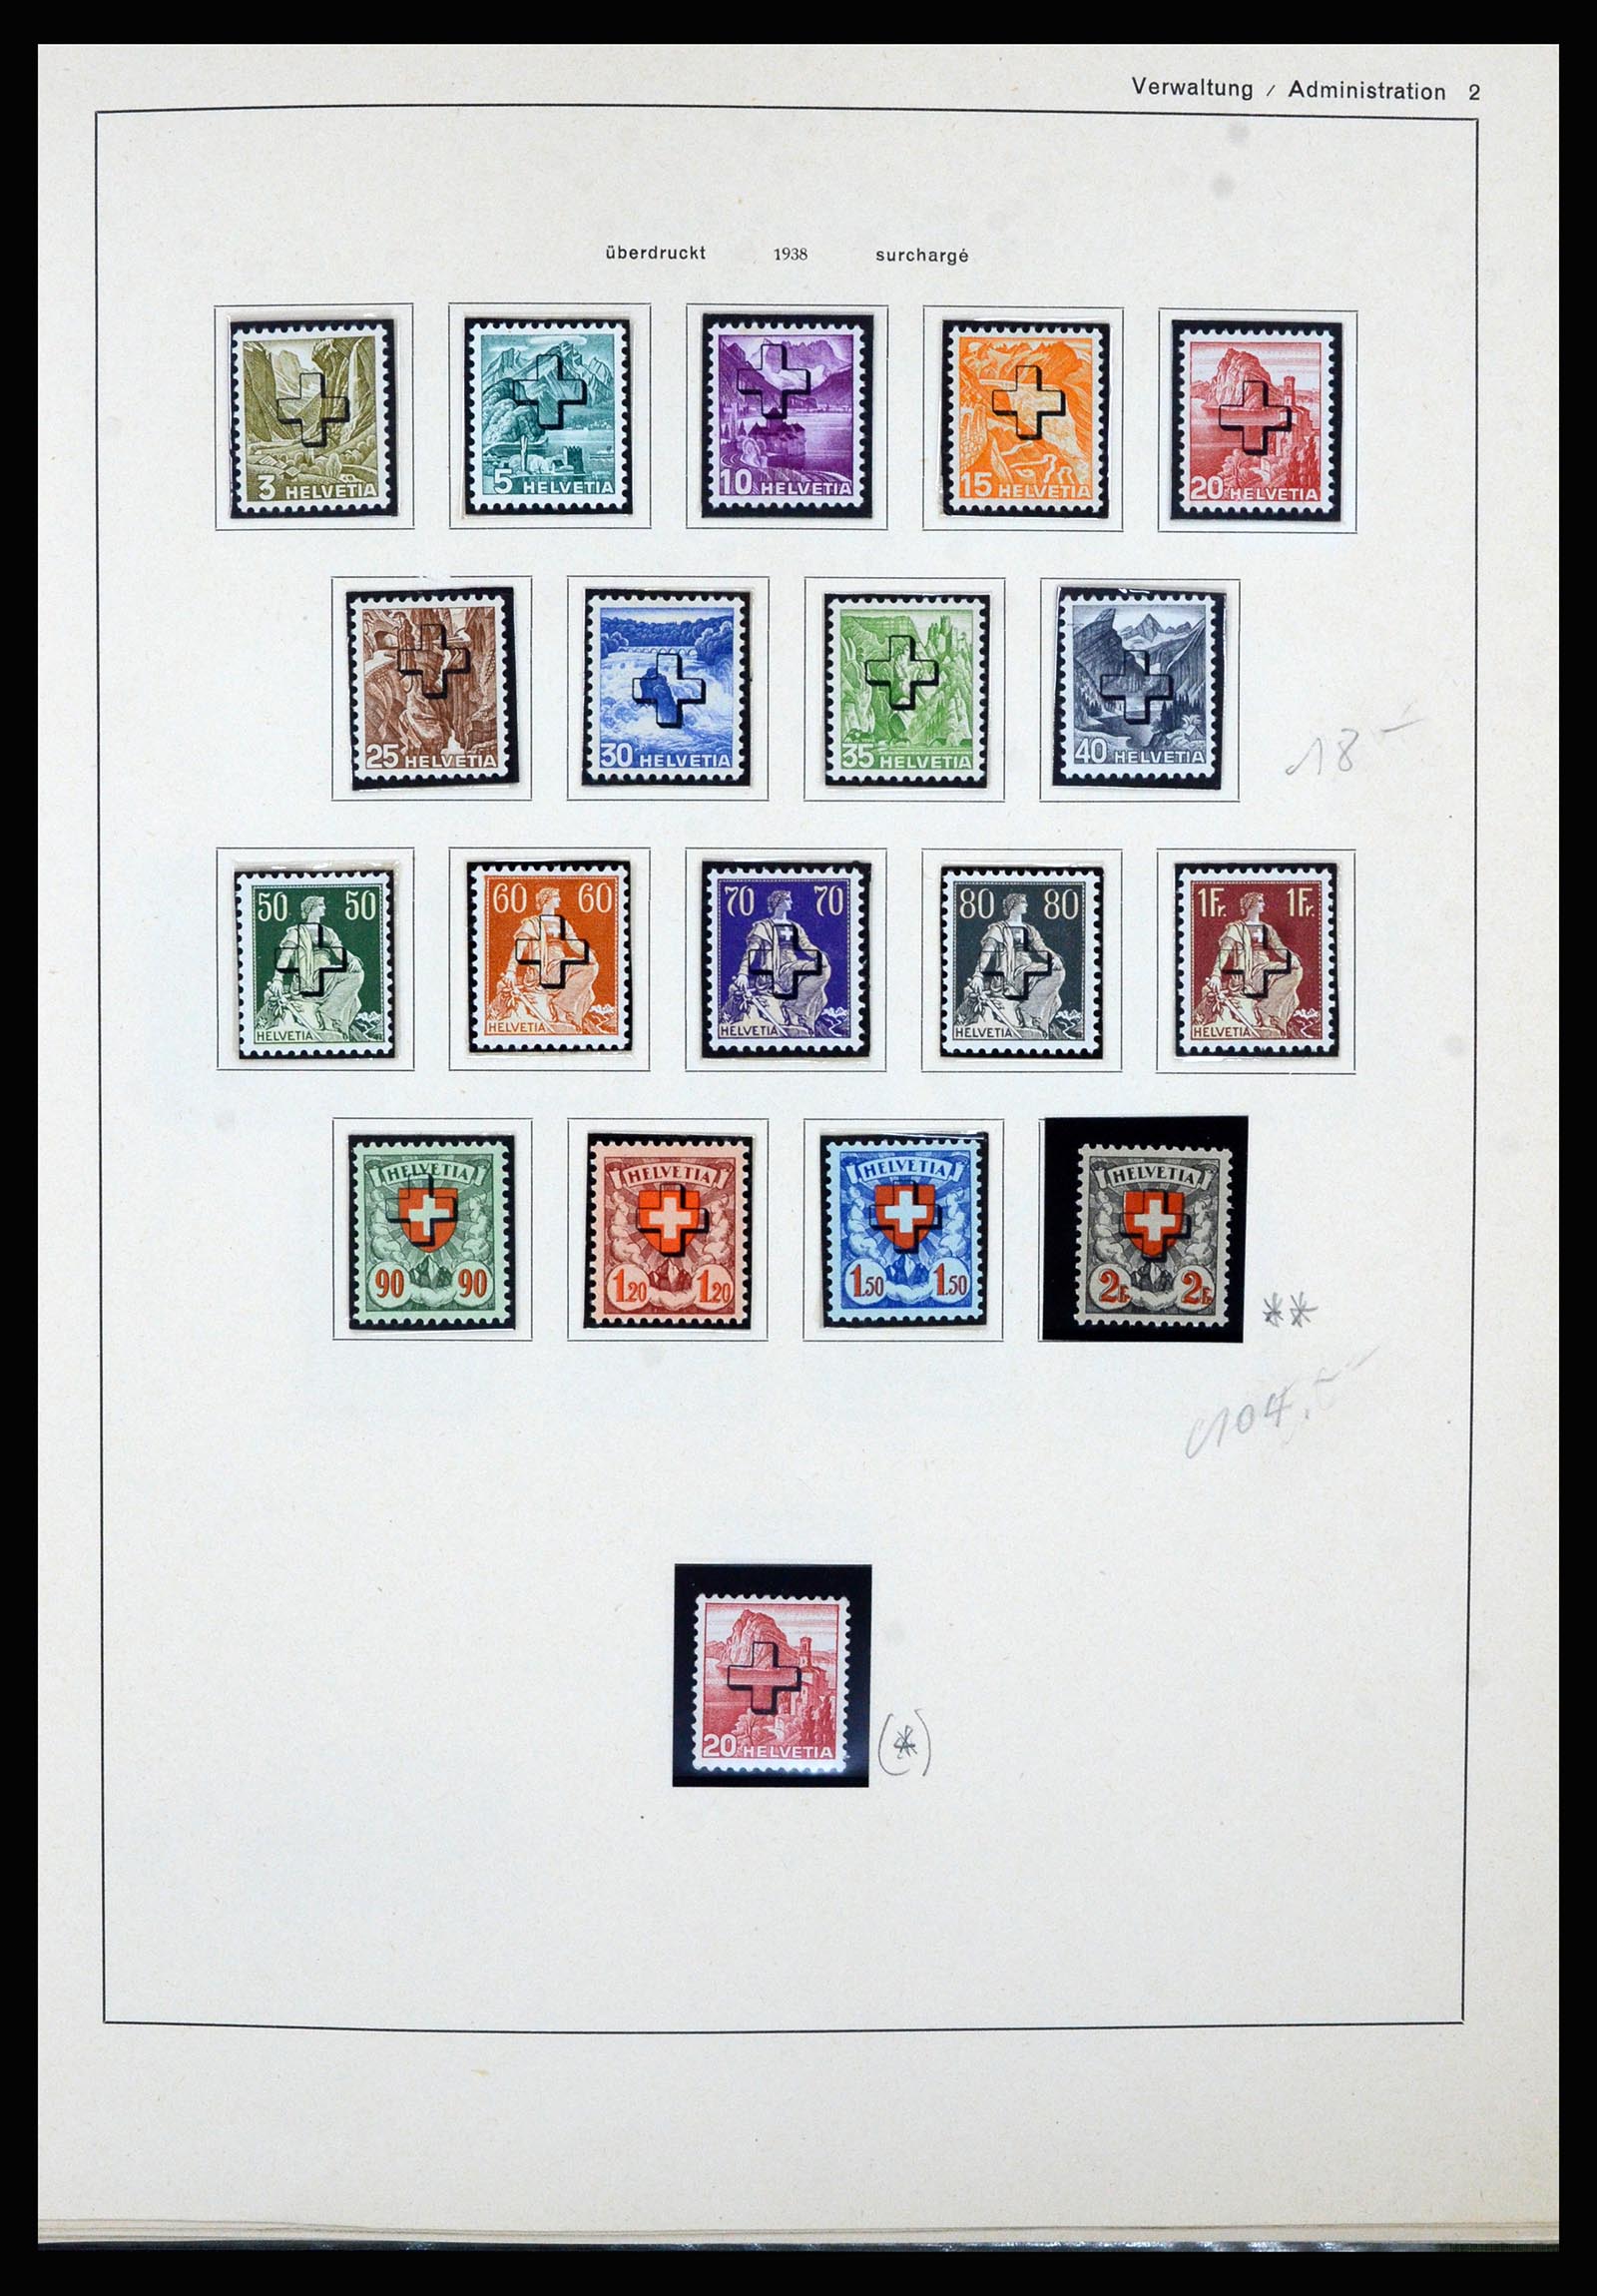 36754 001 - Stamp collection 36754 Switzerland service 1938-1975.